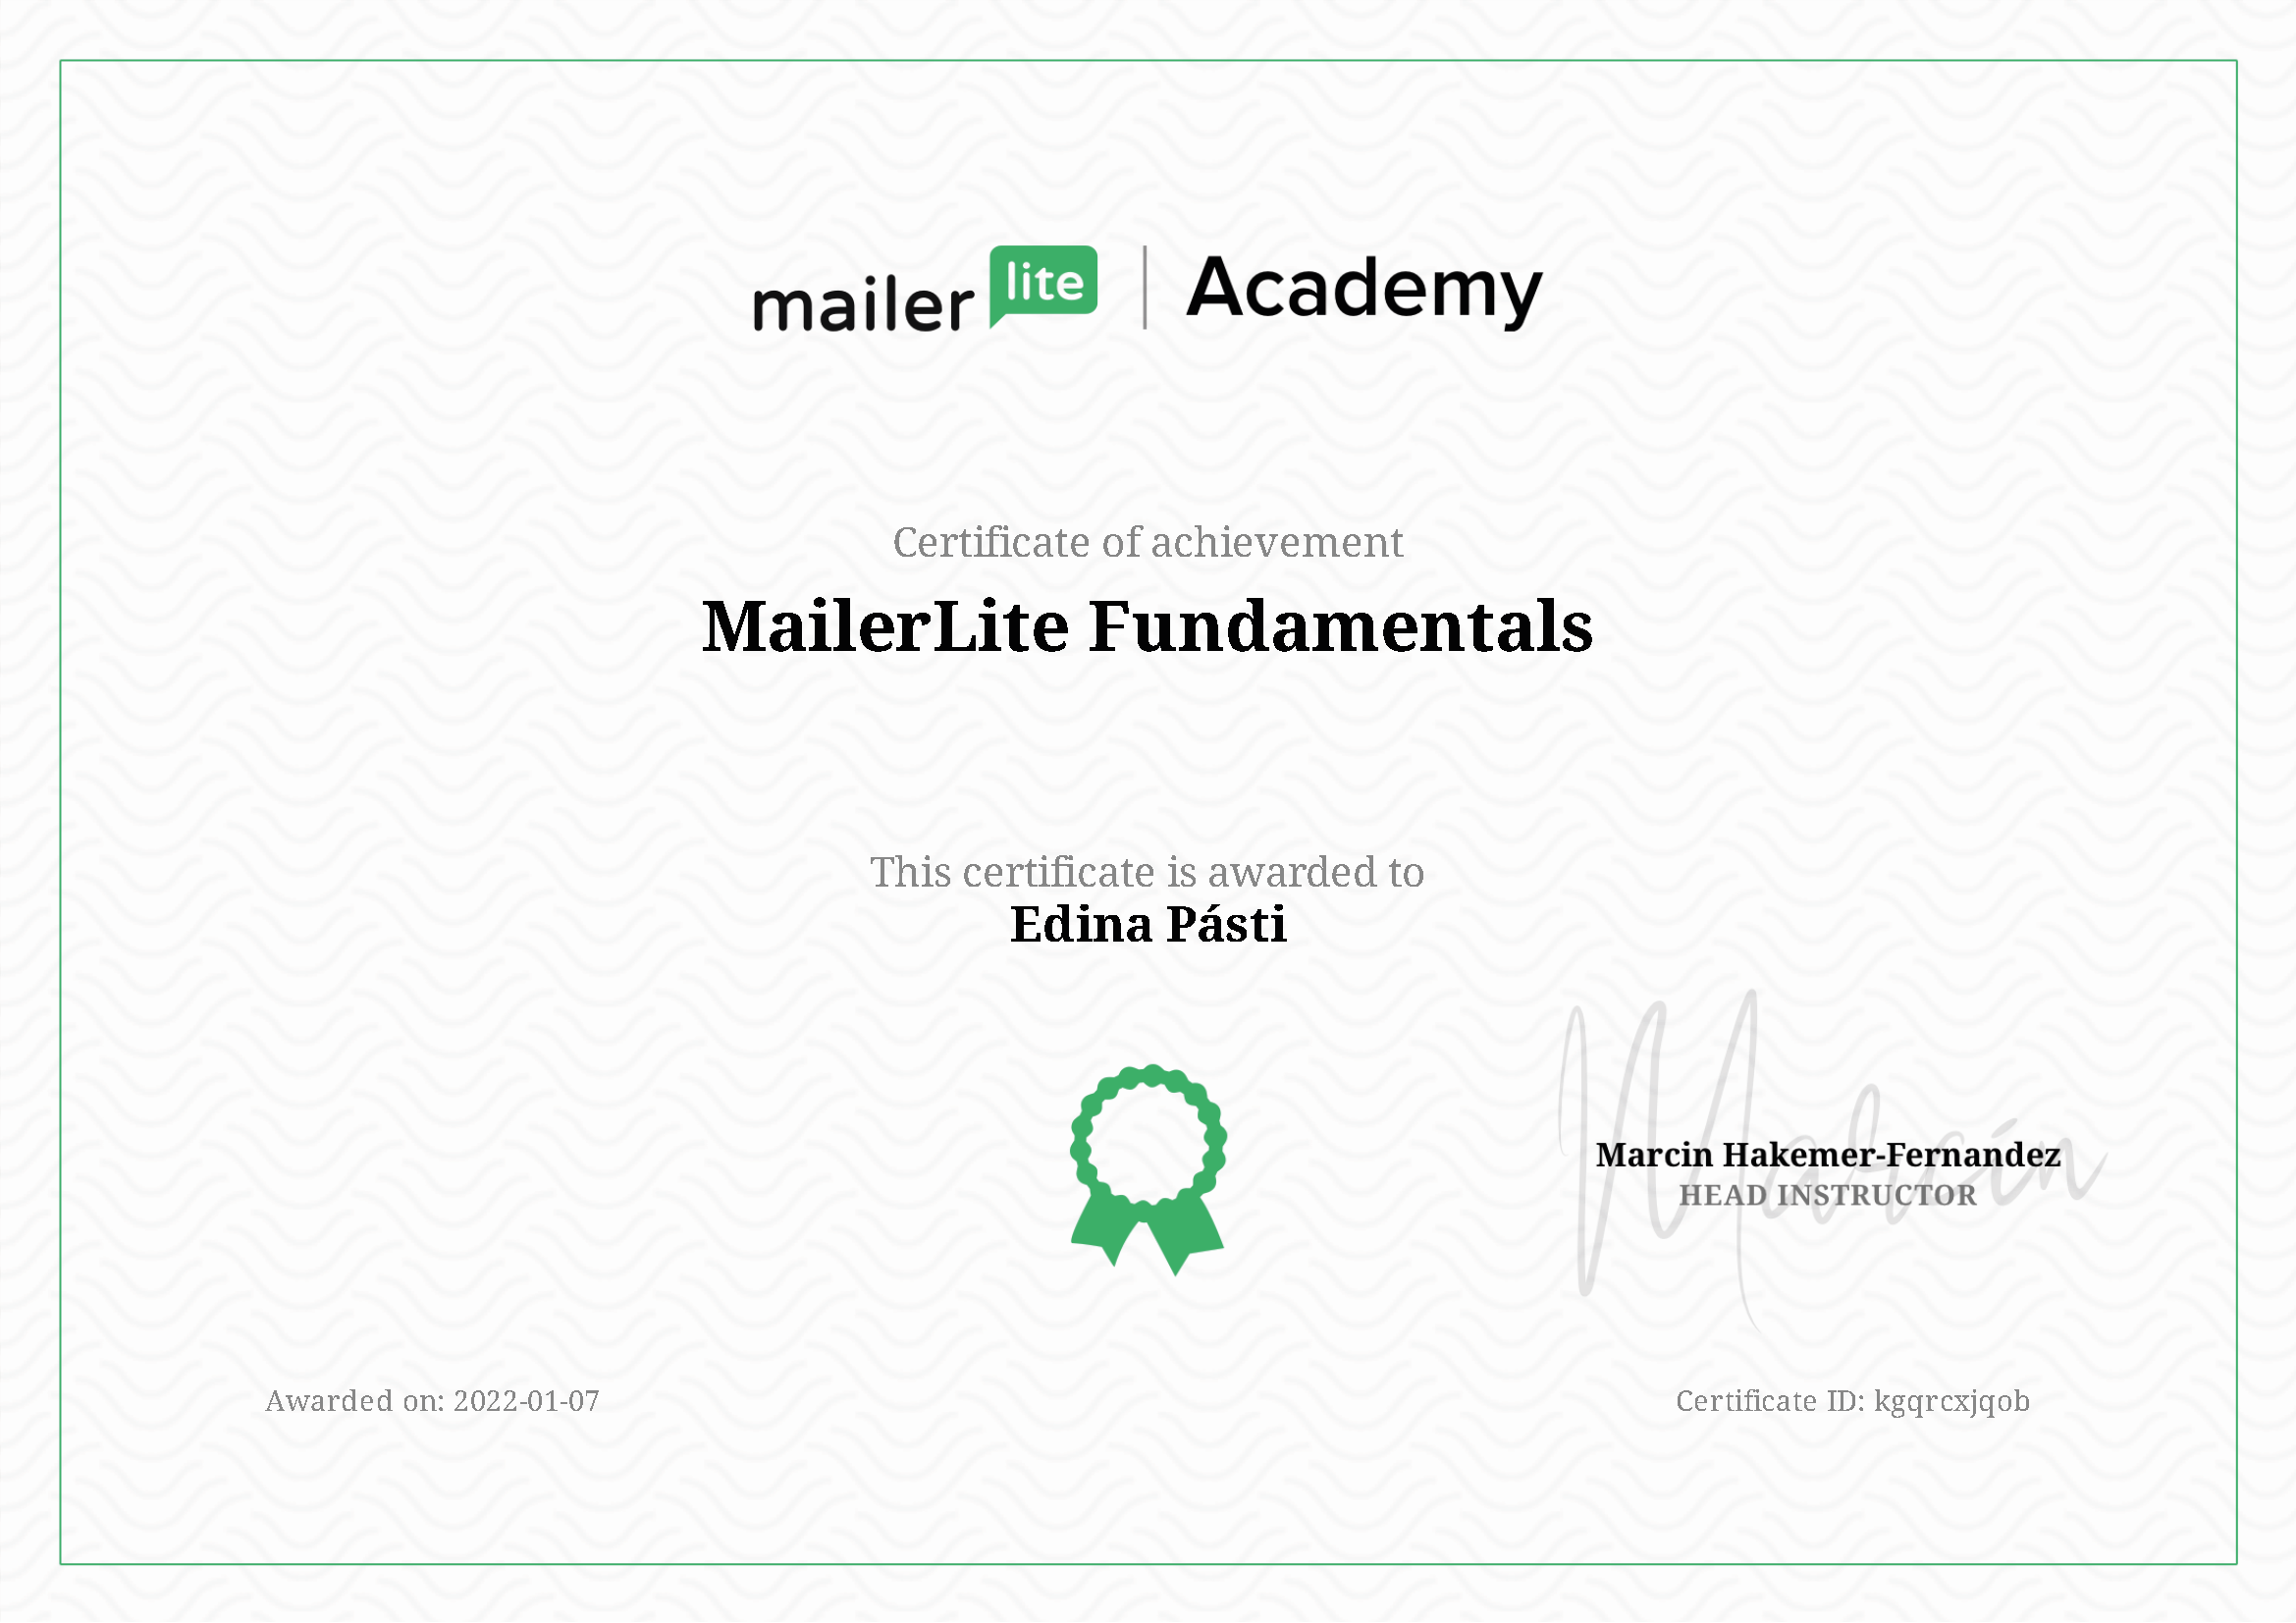 Mailerlite certificate